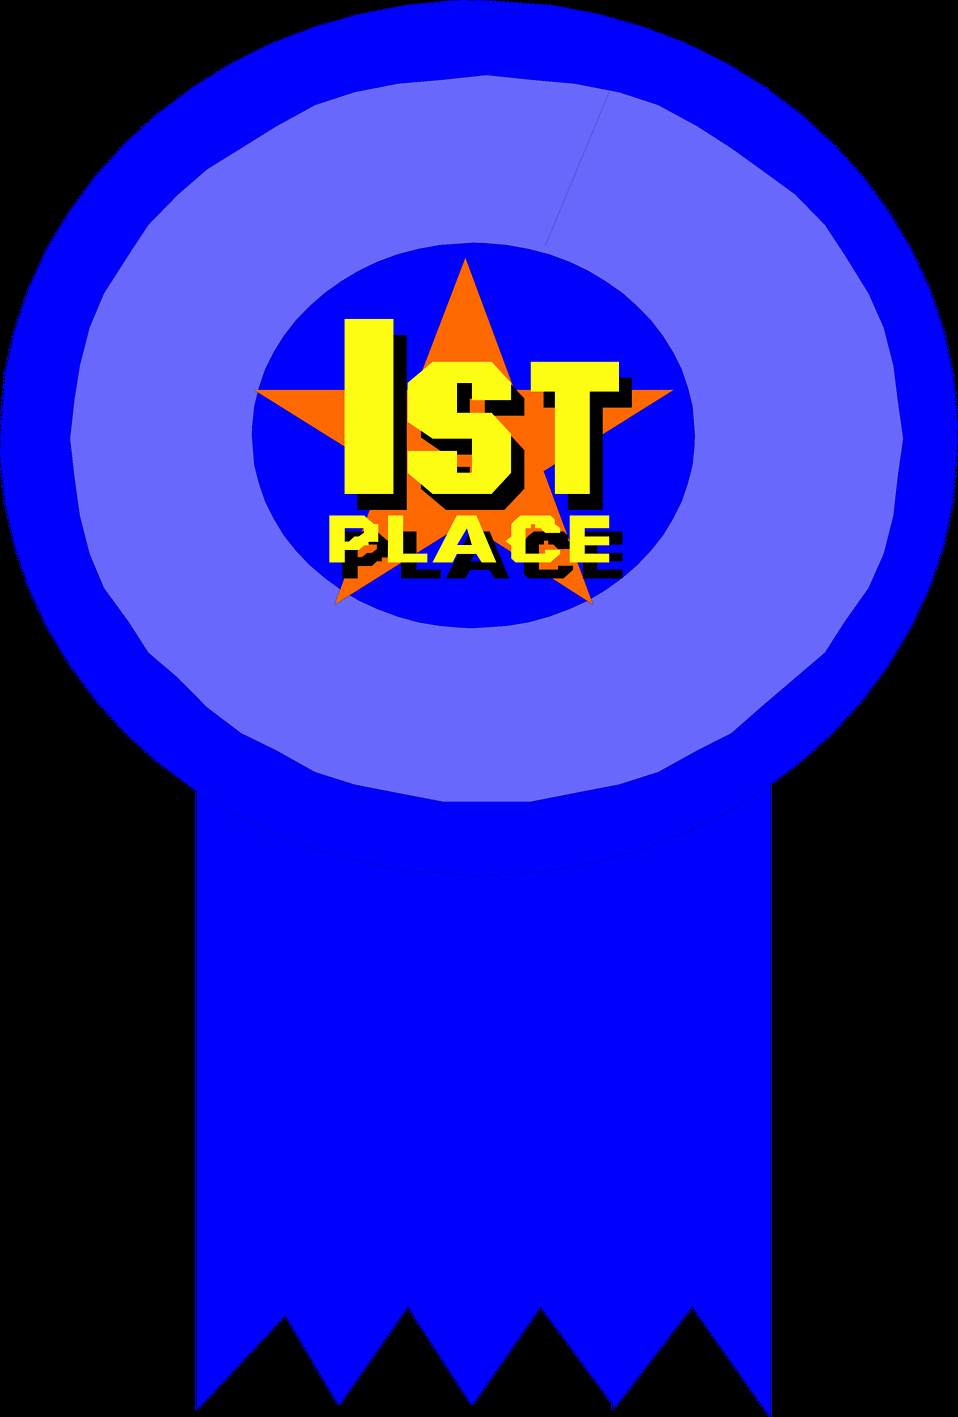 2nd Place Ribbon Png Inspirational Award Free Stock